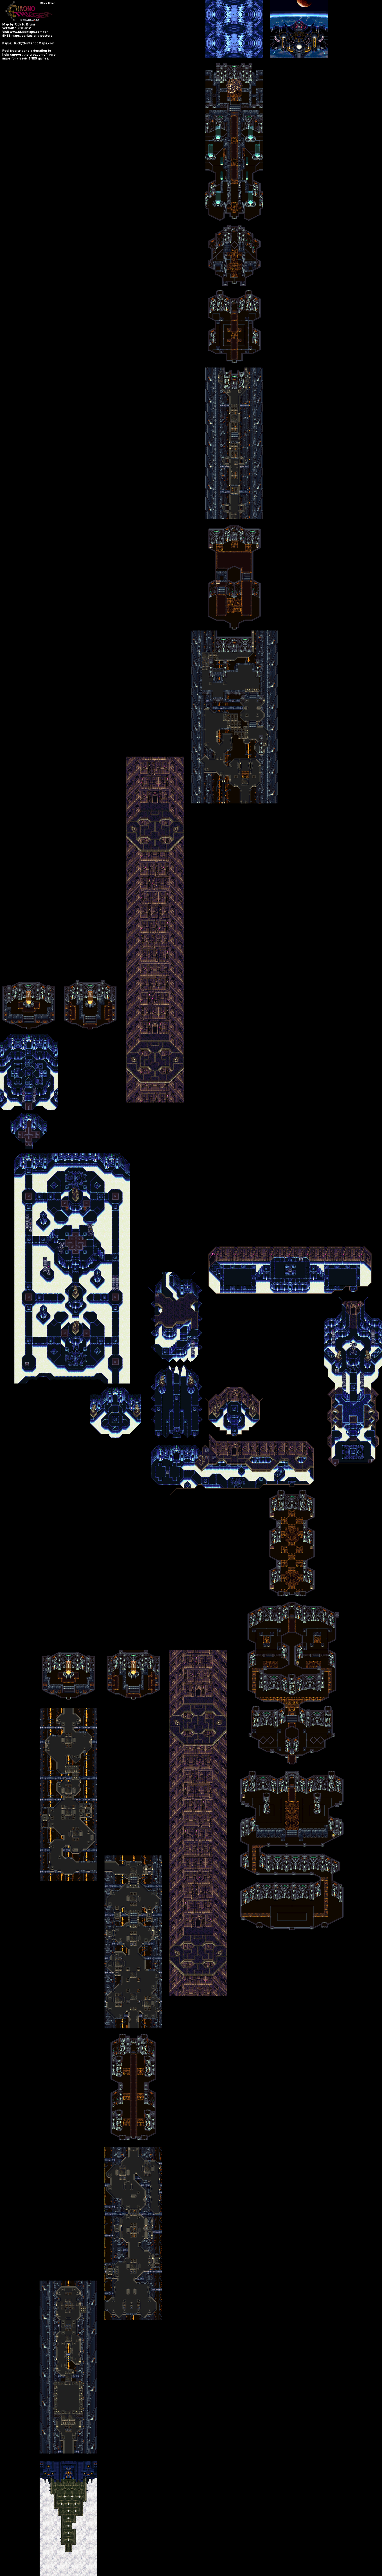 Chrono Trigger - Black Omen Super Nintendo SNES Map BG